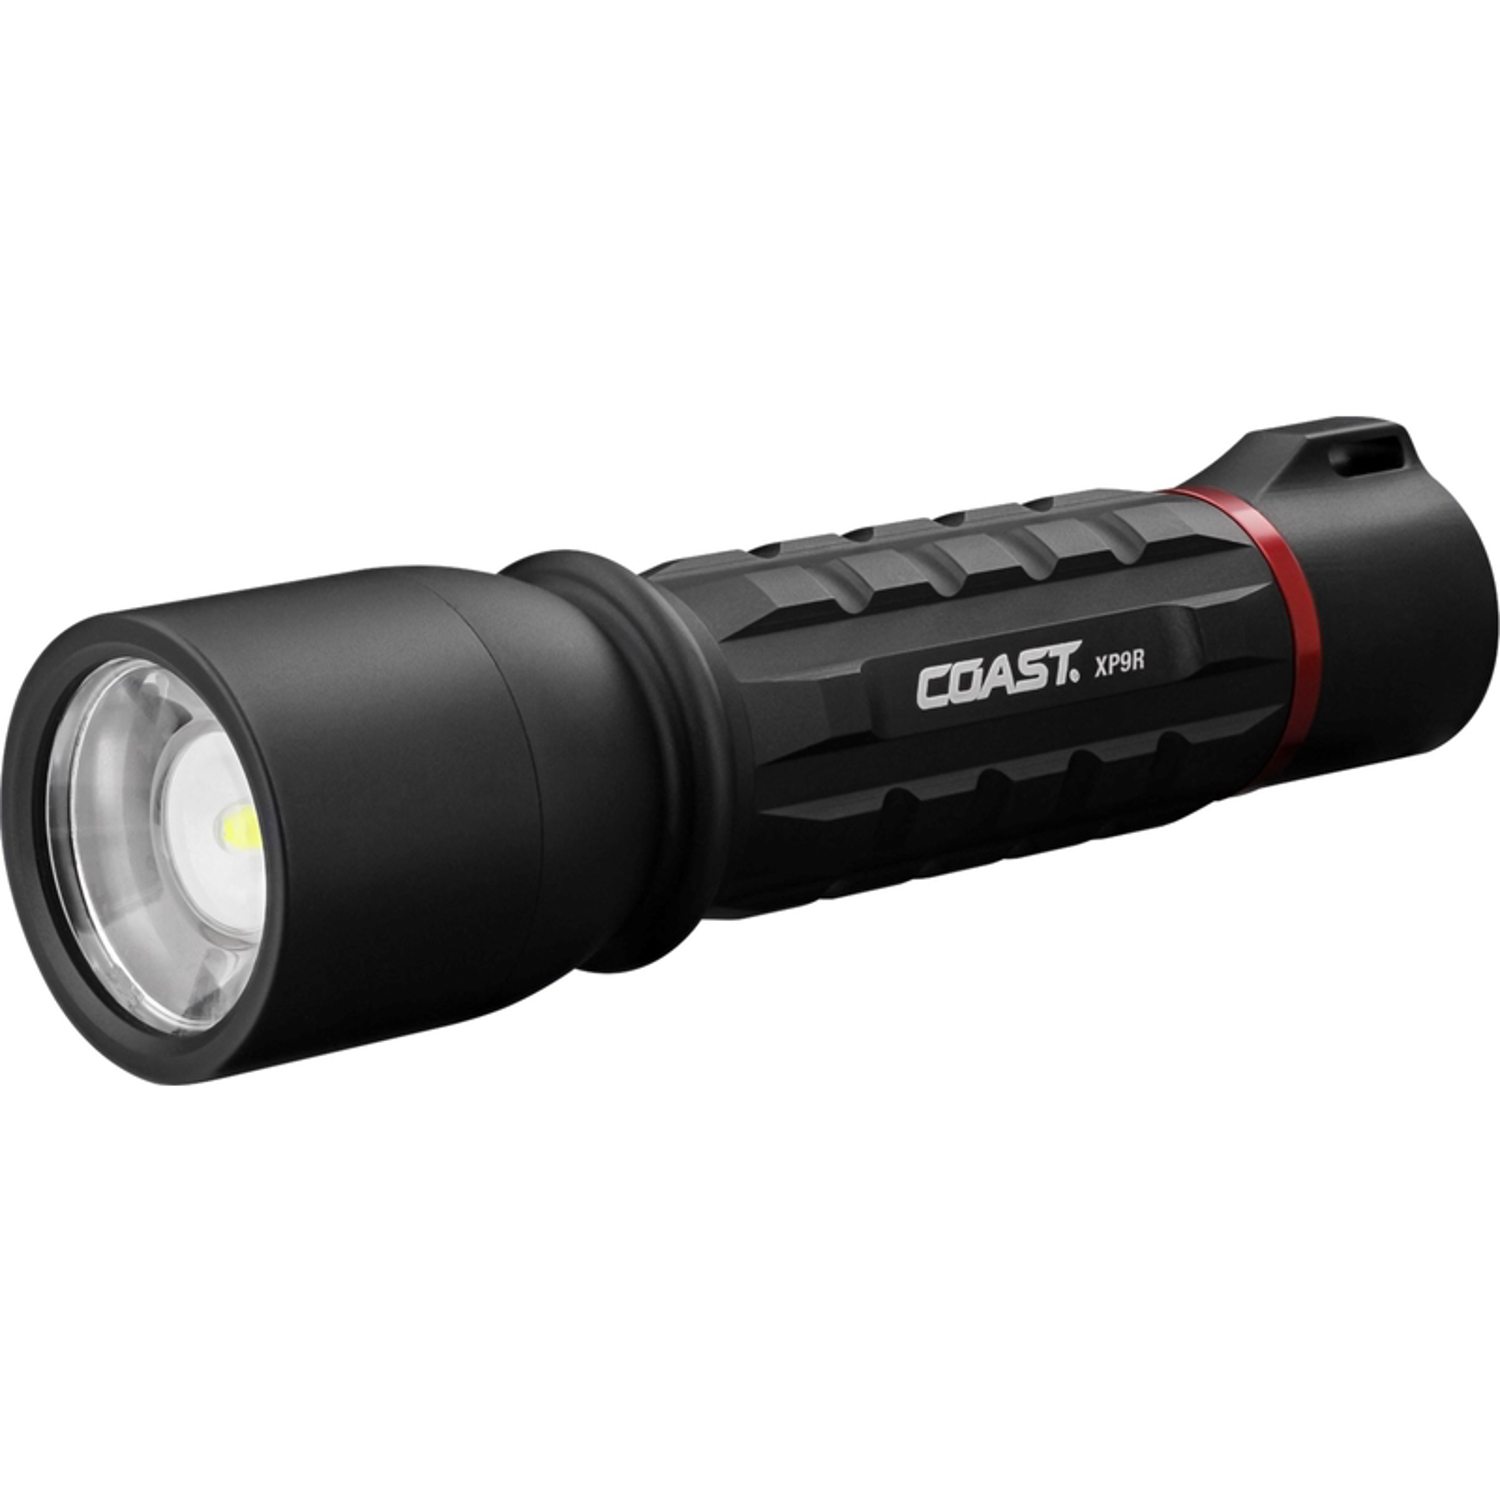 Photos - Torch Coast XP9R 1000 lm Black LED Rechargeable Flashlight CR123 Battery 30331 